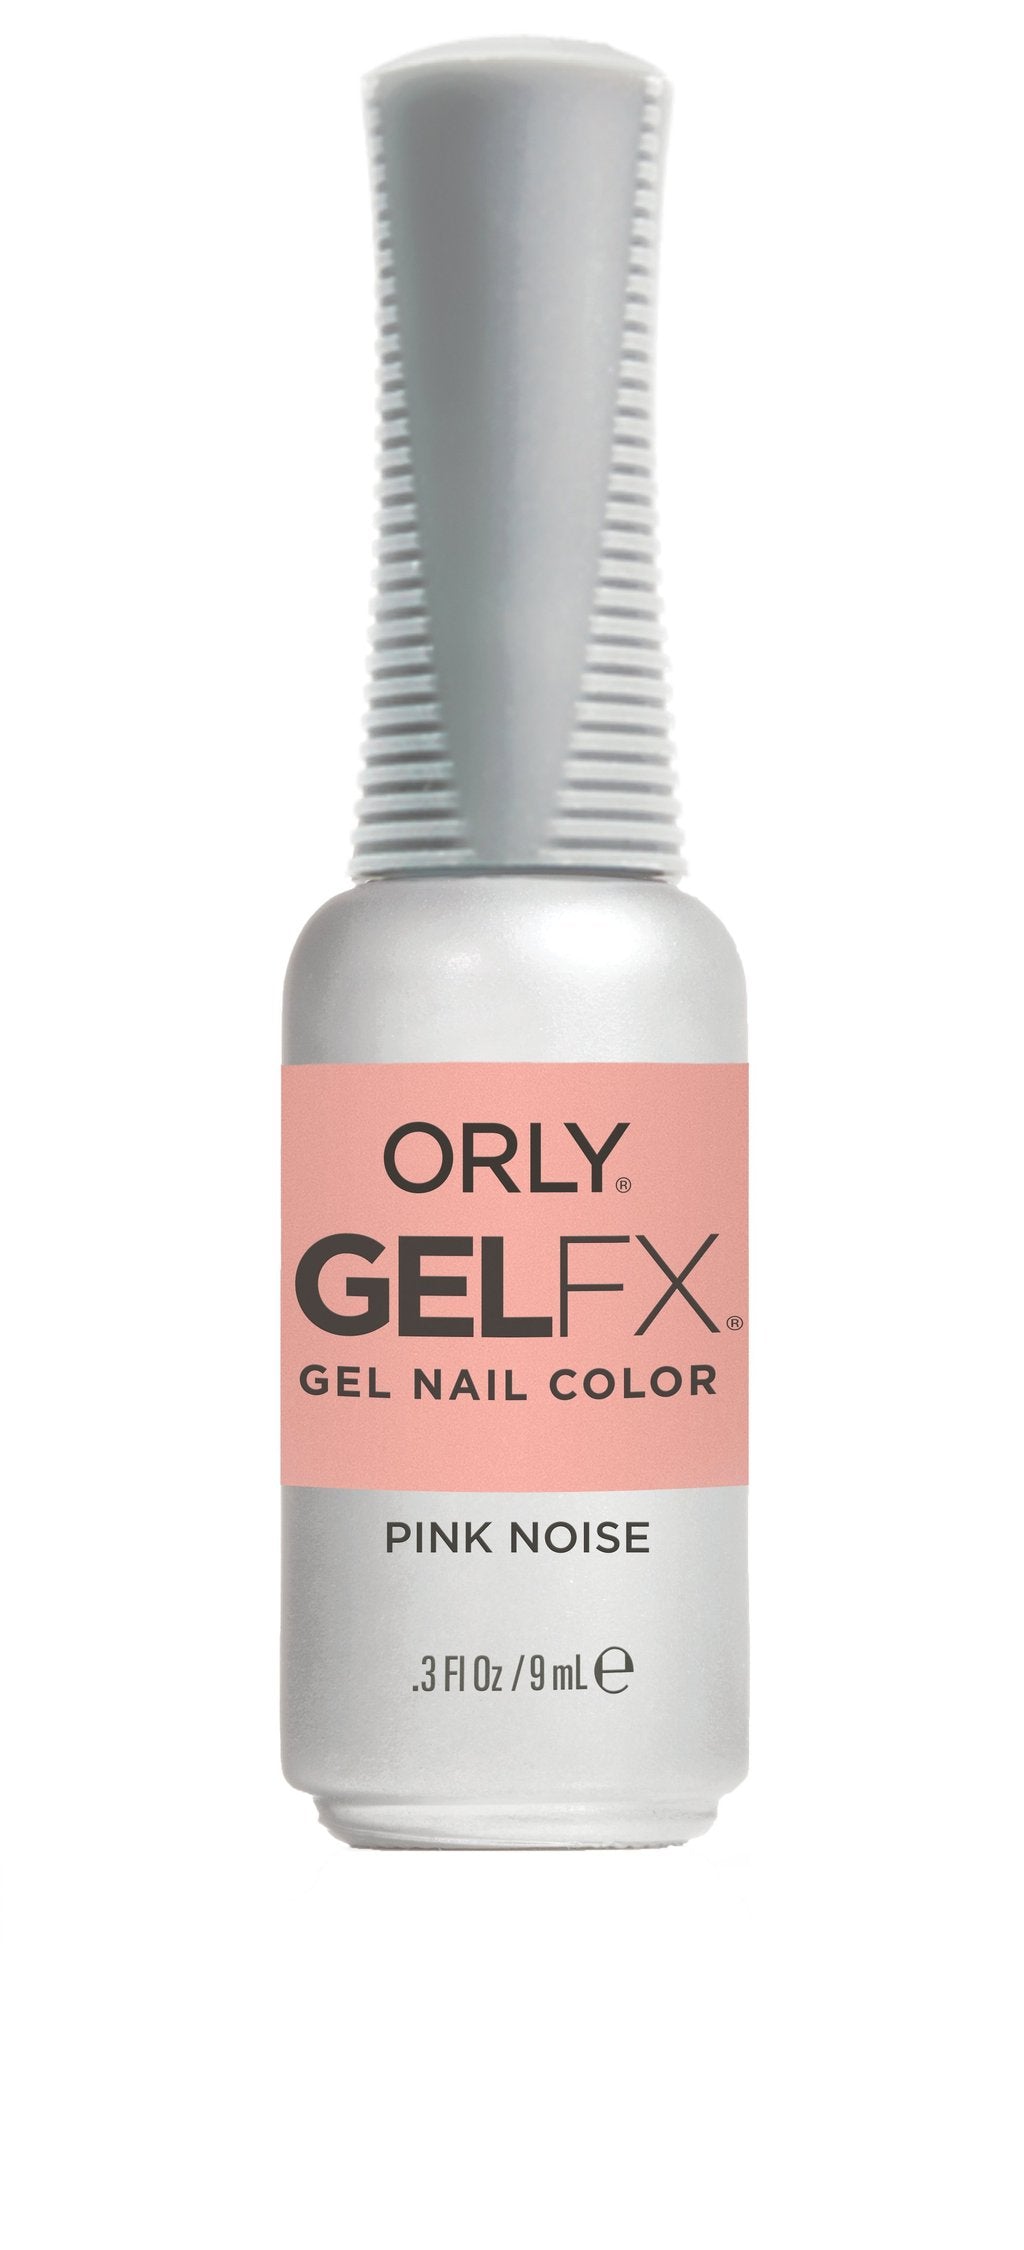 Orly GelFX Pink Noise .3 fl oz 30972